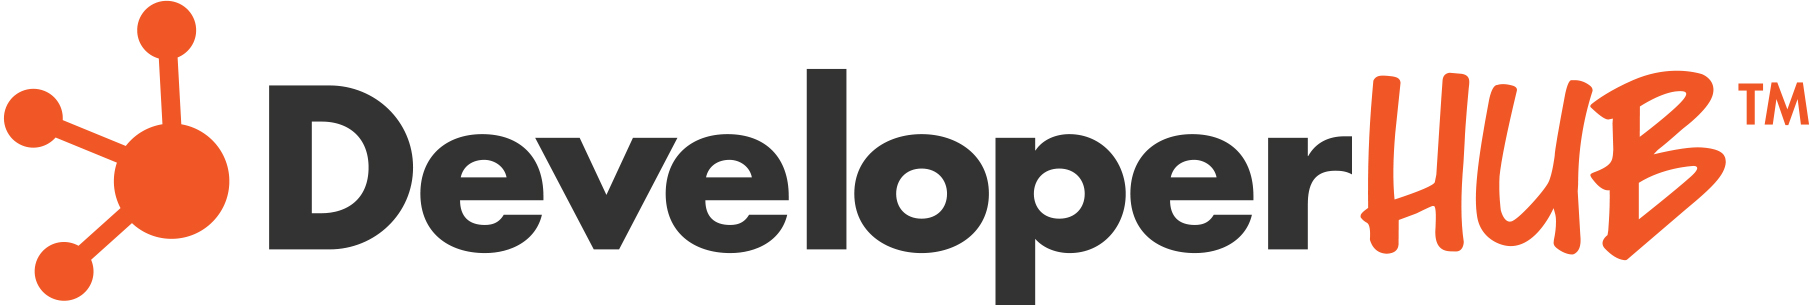 DeveloperHUB™ Logo